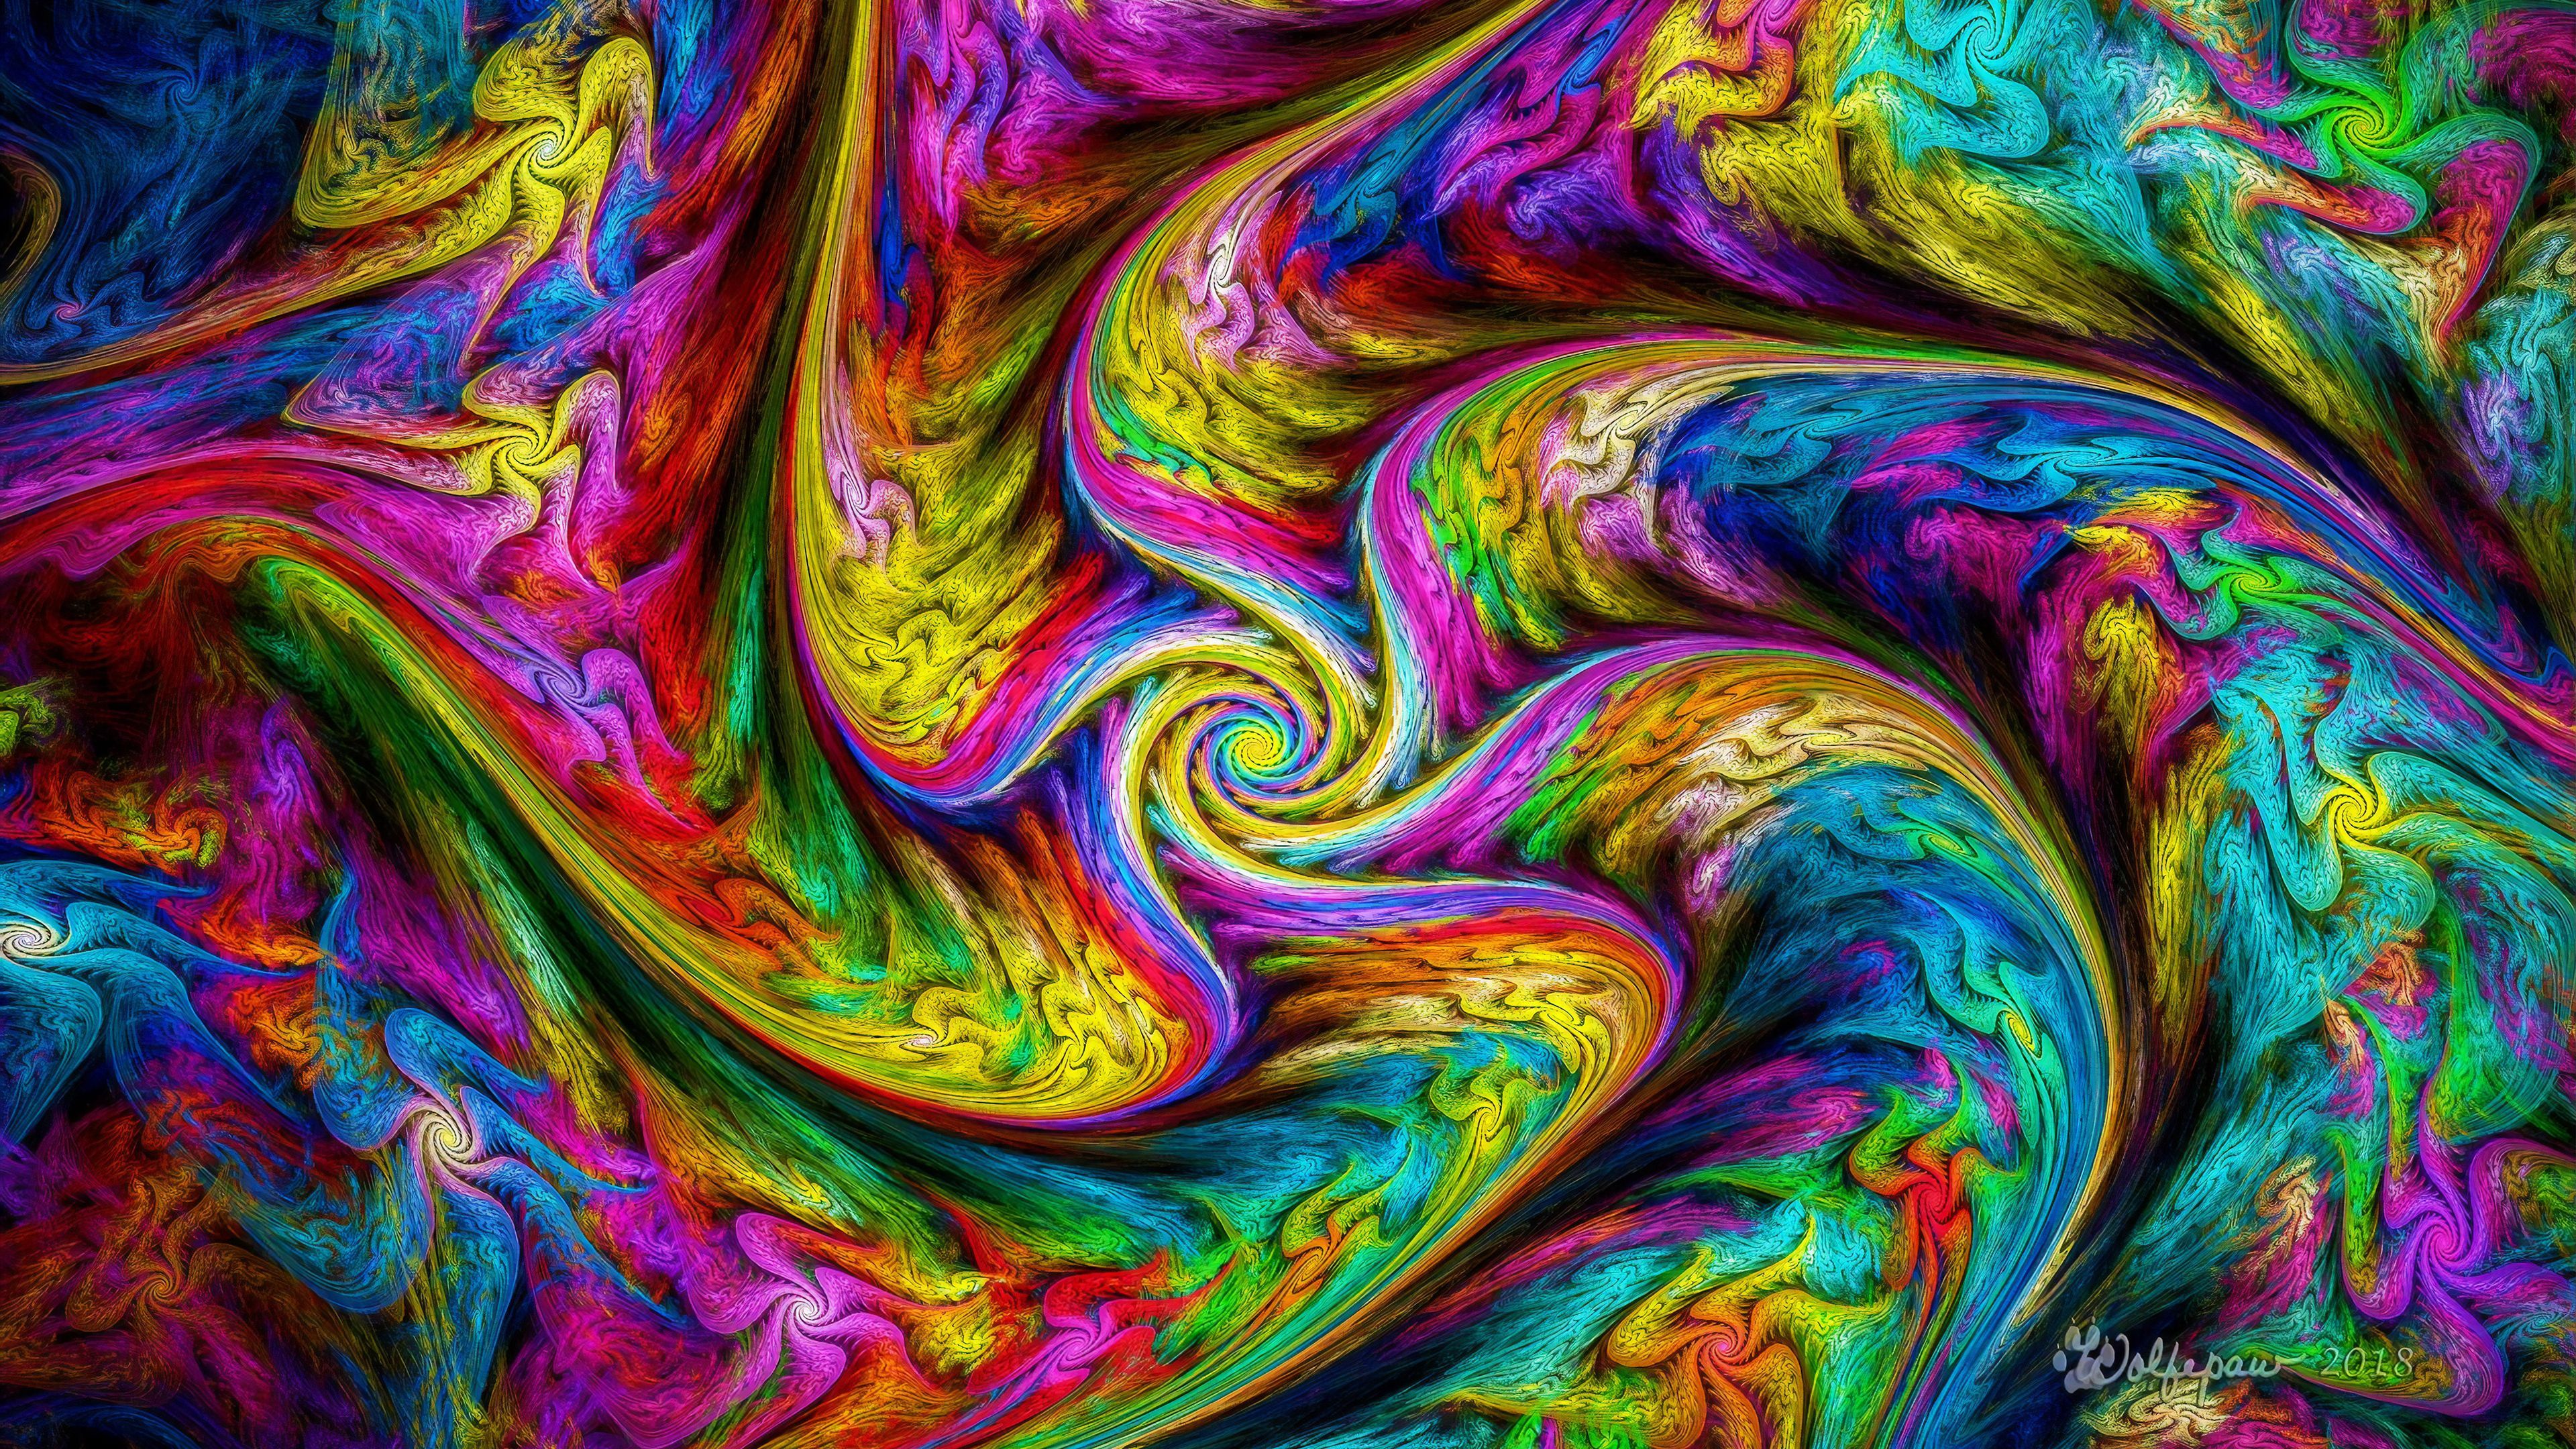 Rainbow Gnarl Hd Wallpaper, Digital Art Wallpaper, Wallpaper, Colorful Wallpaper, Abstract W. Abstract Wallpaper, Art Wallpaper, Colorful Wallpaper